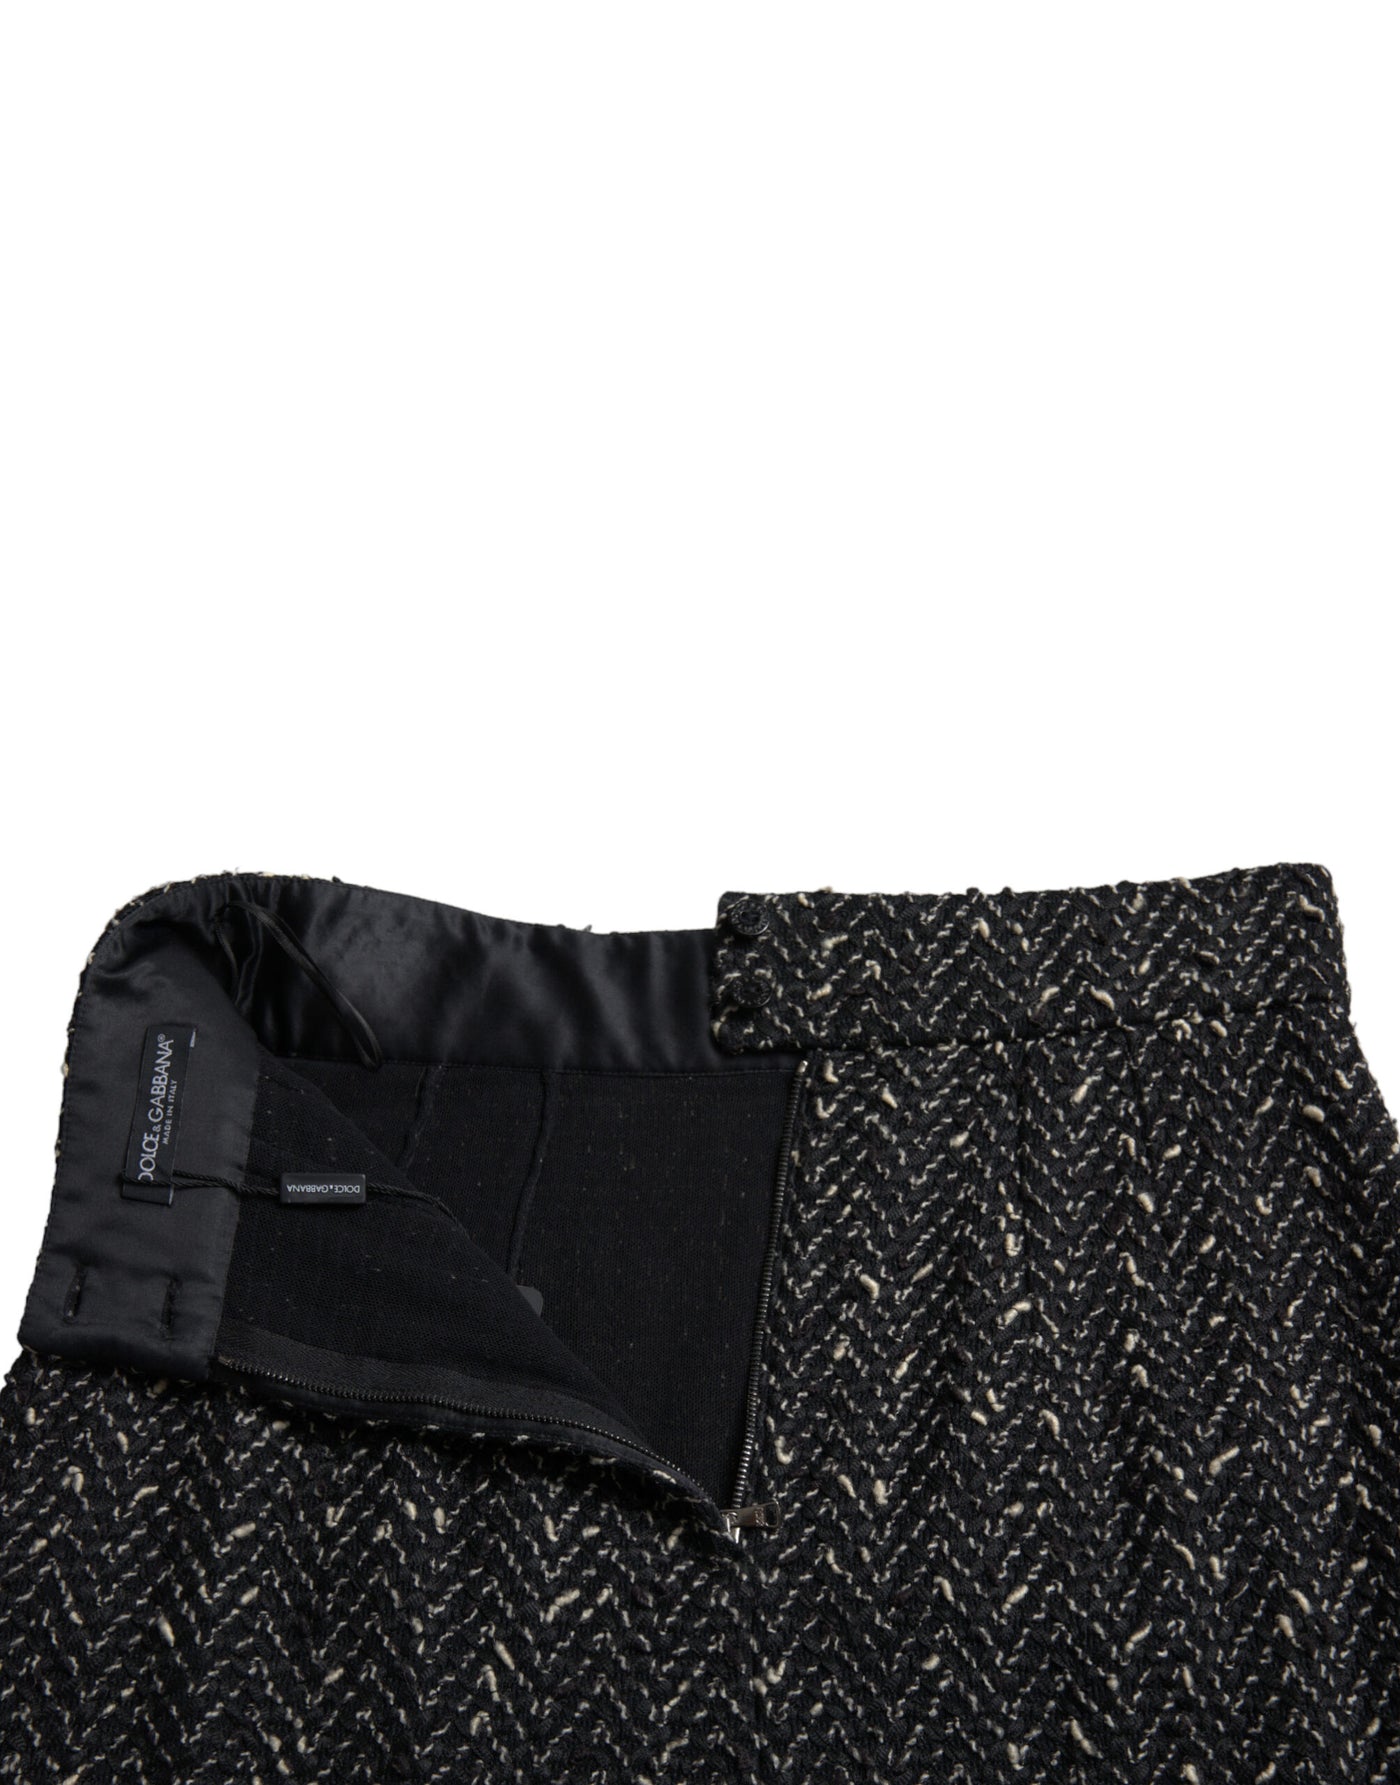 Dolce & Gabbana Black Wool Knit Tweed High Waist Mini Skirt